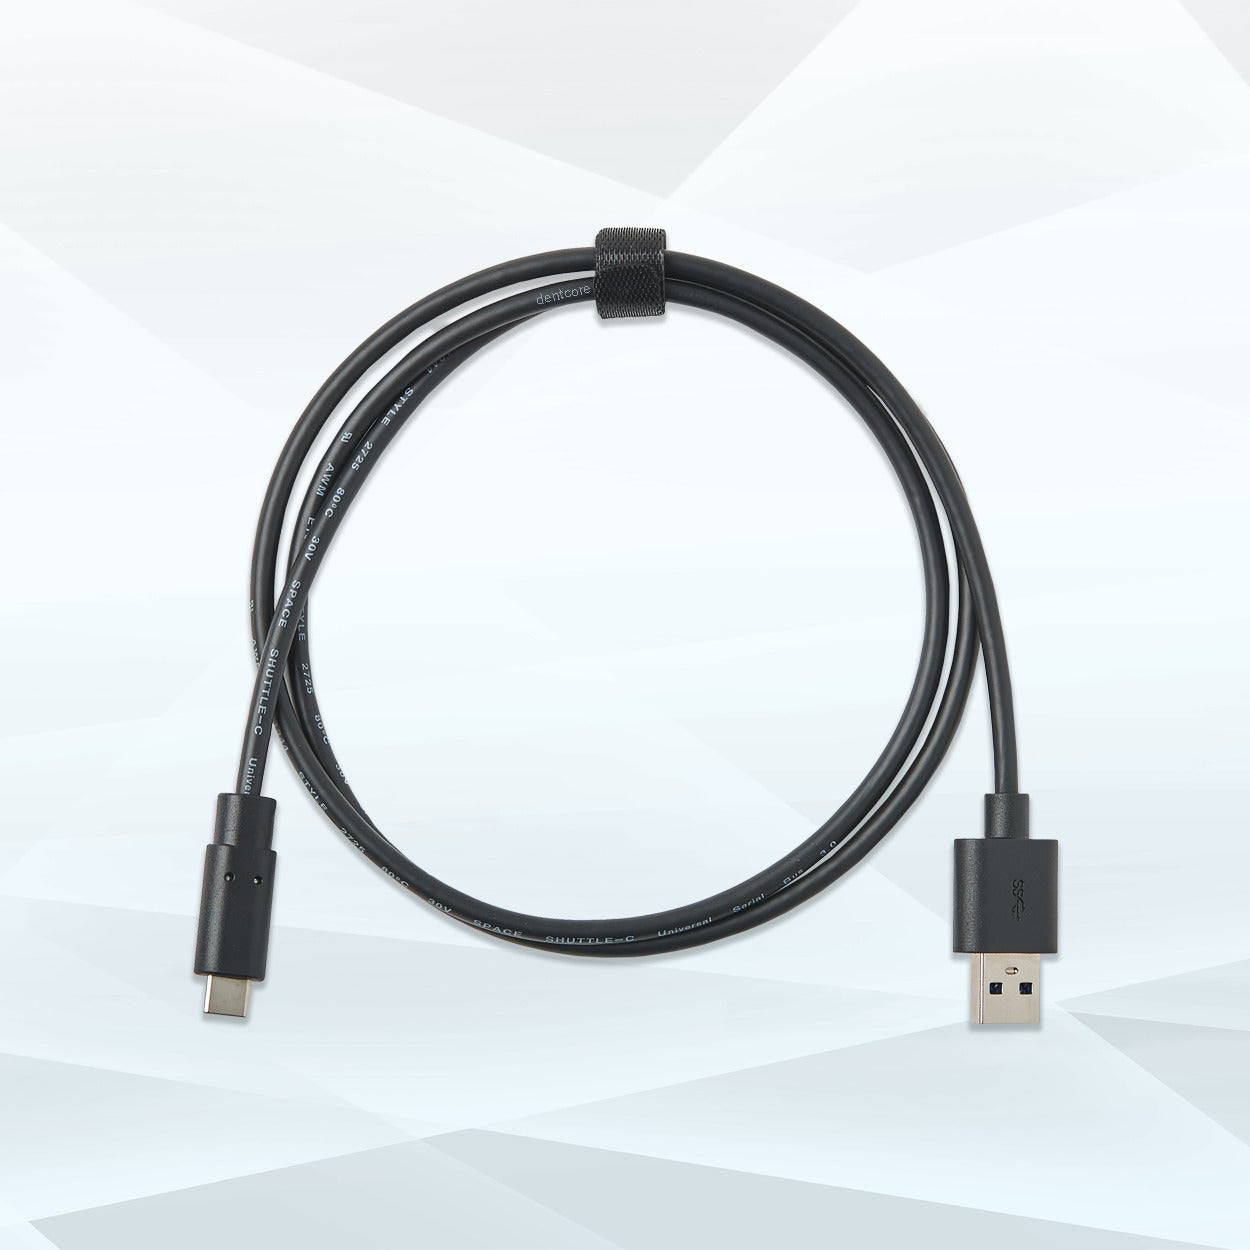 i700 USB 3.0 Cable